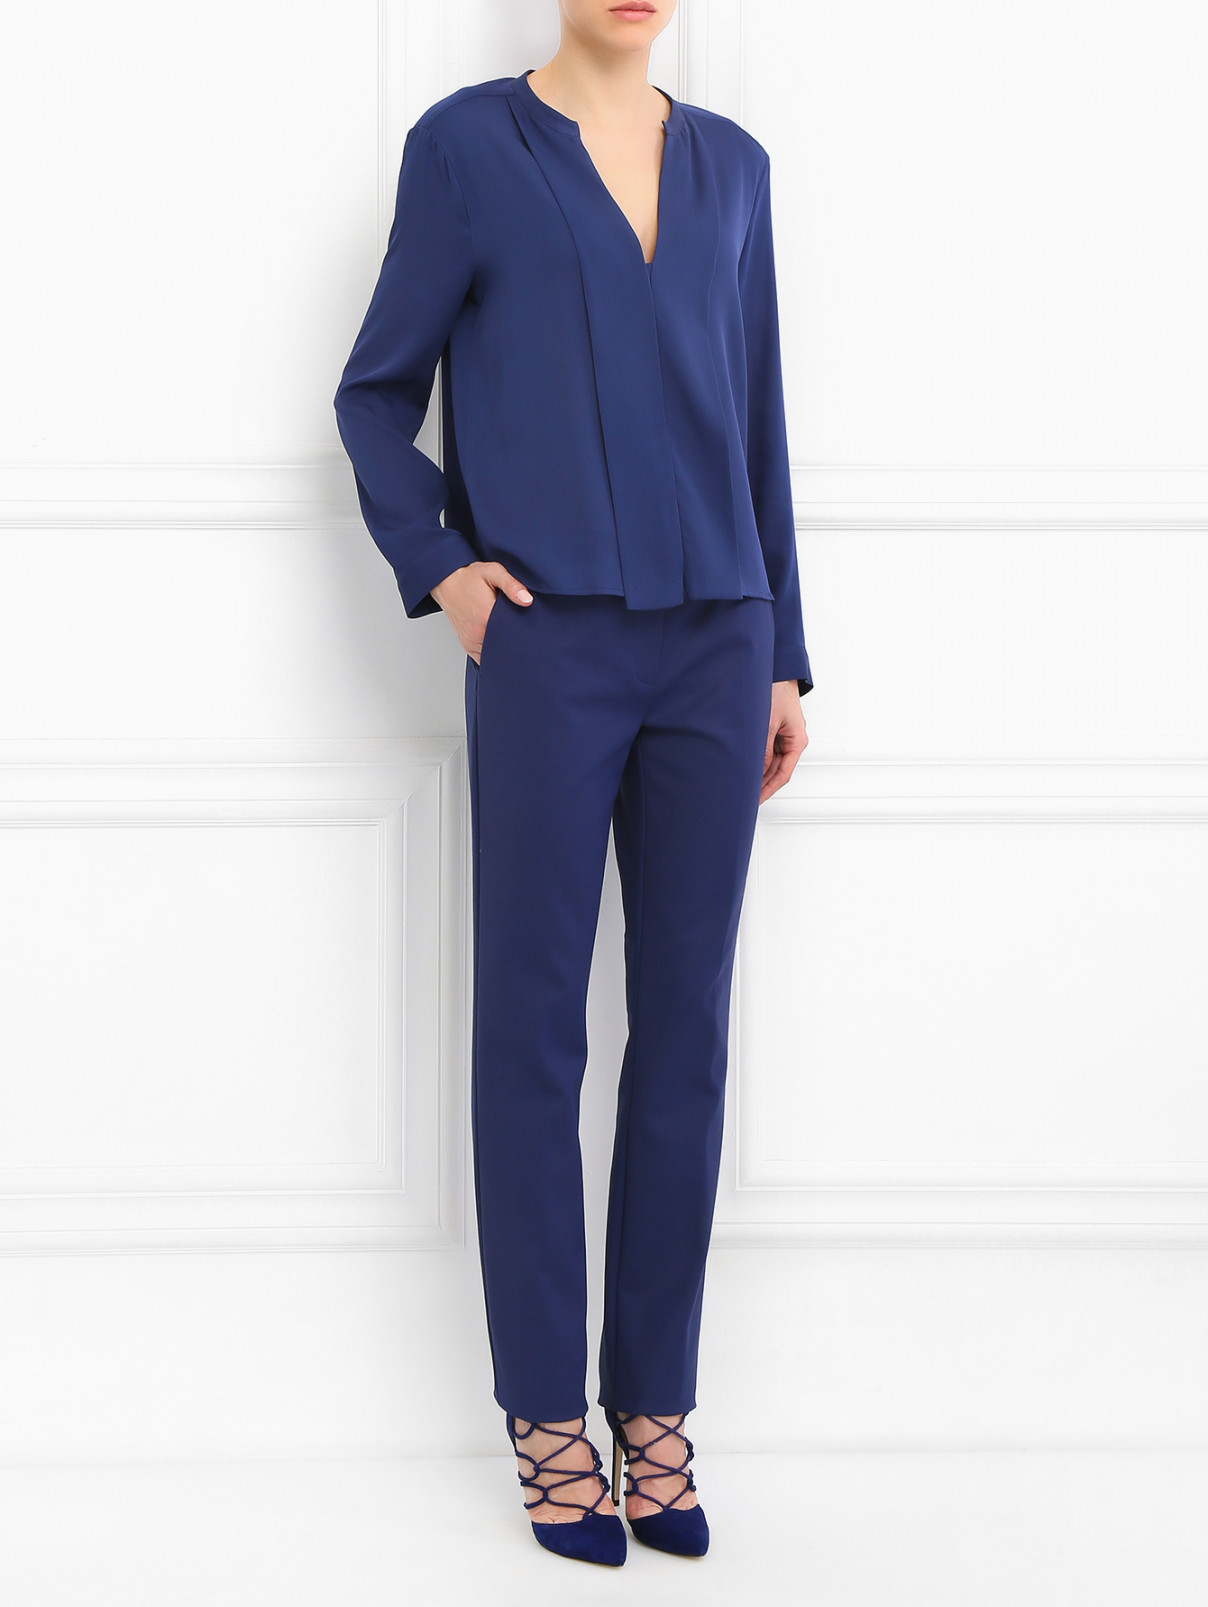 Блуза из шелка Tara Jarmon  –  Модель Общий вид  – Цвет:  Синий